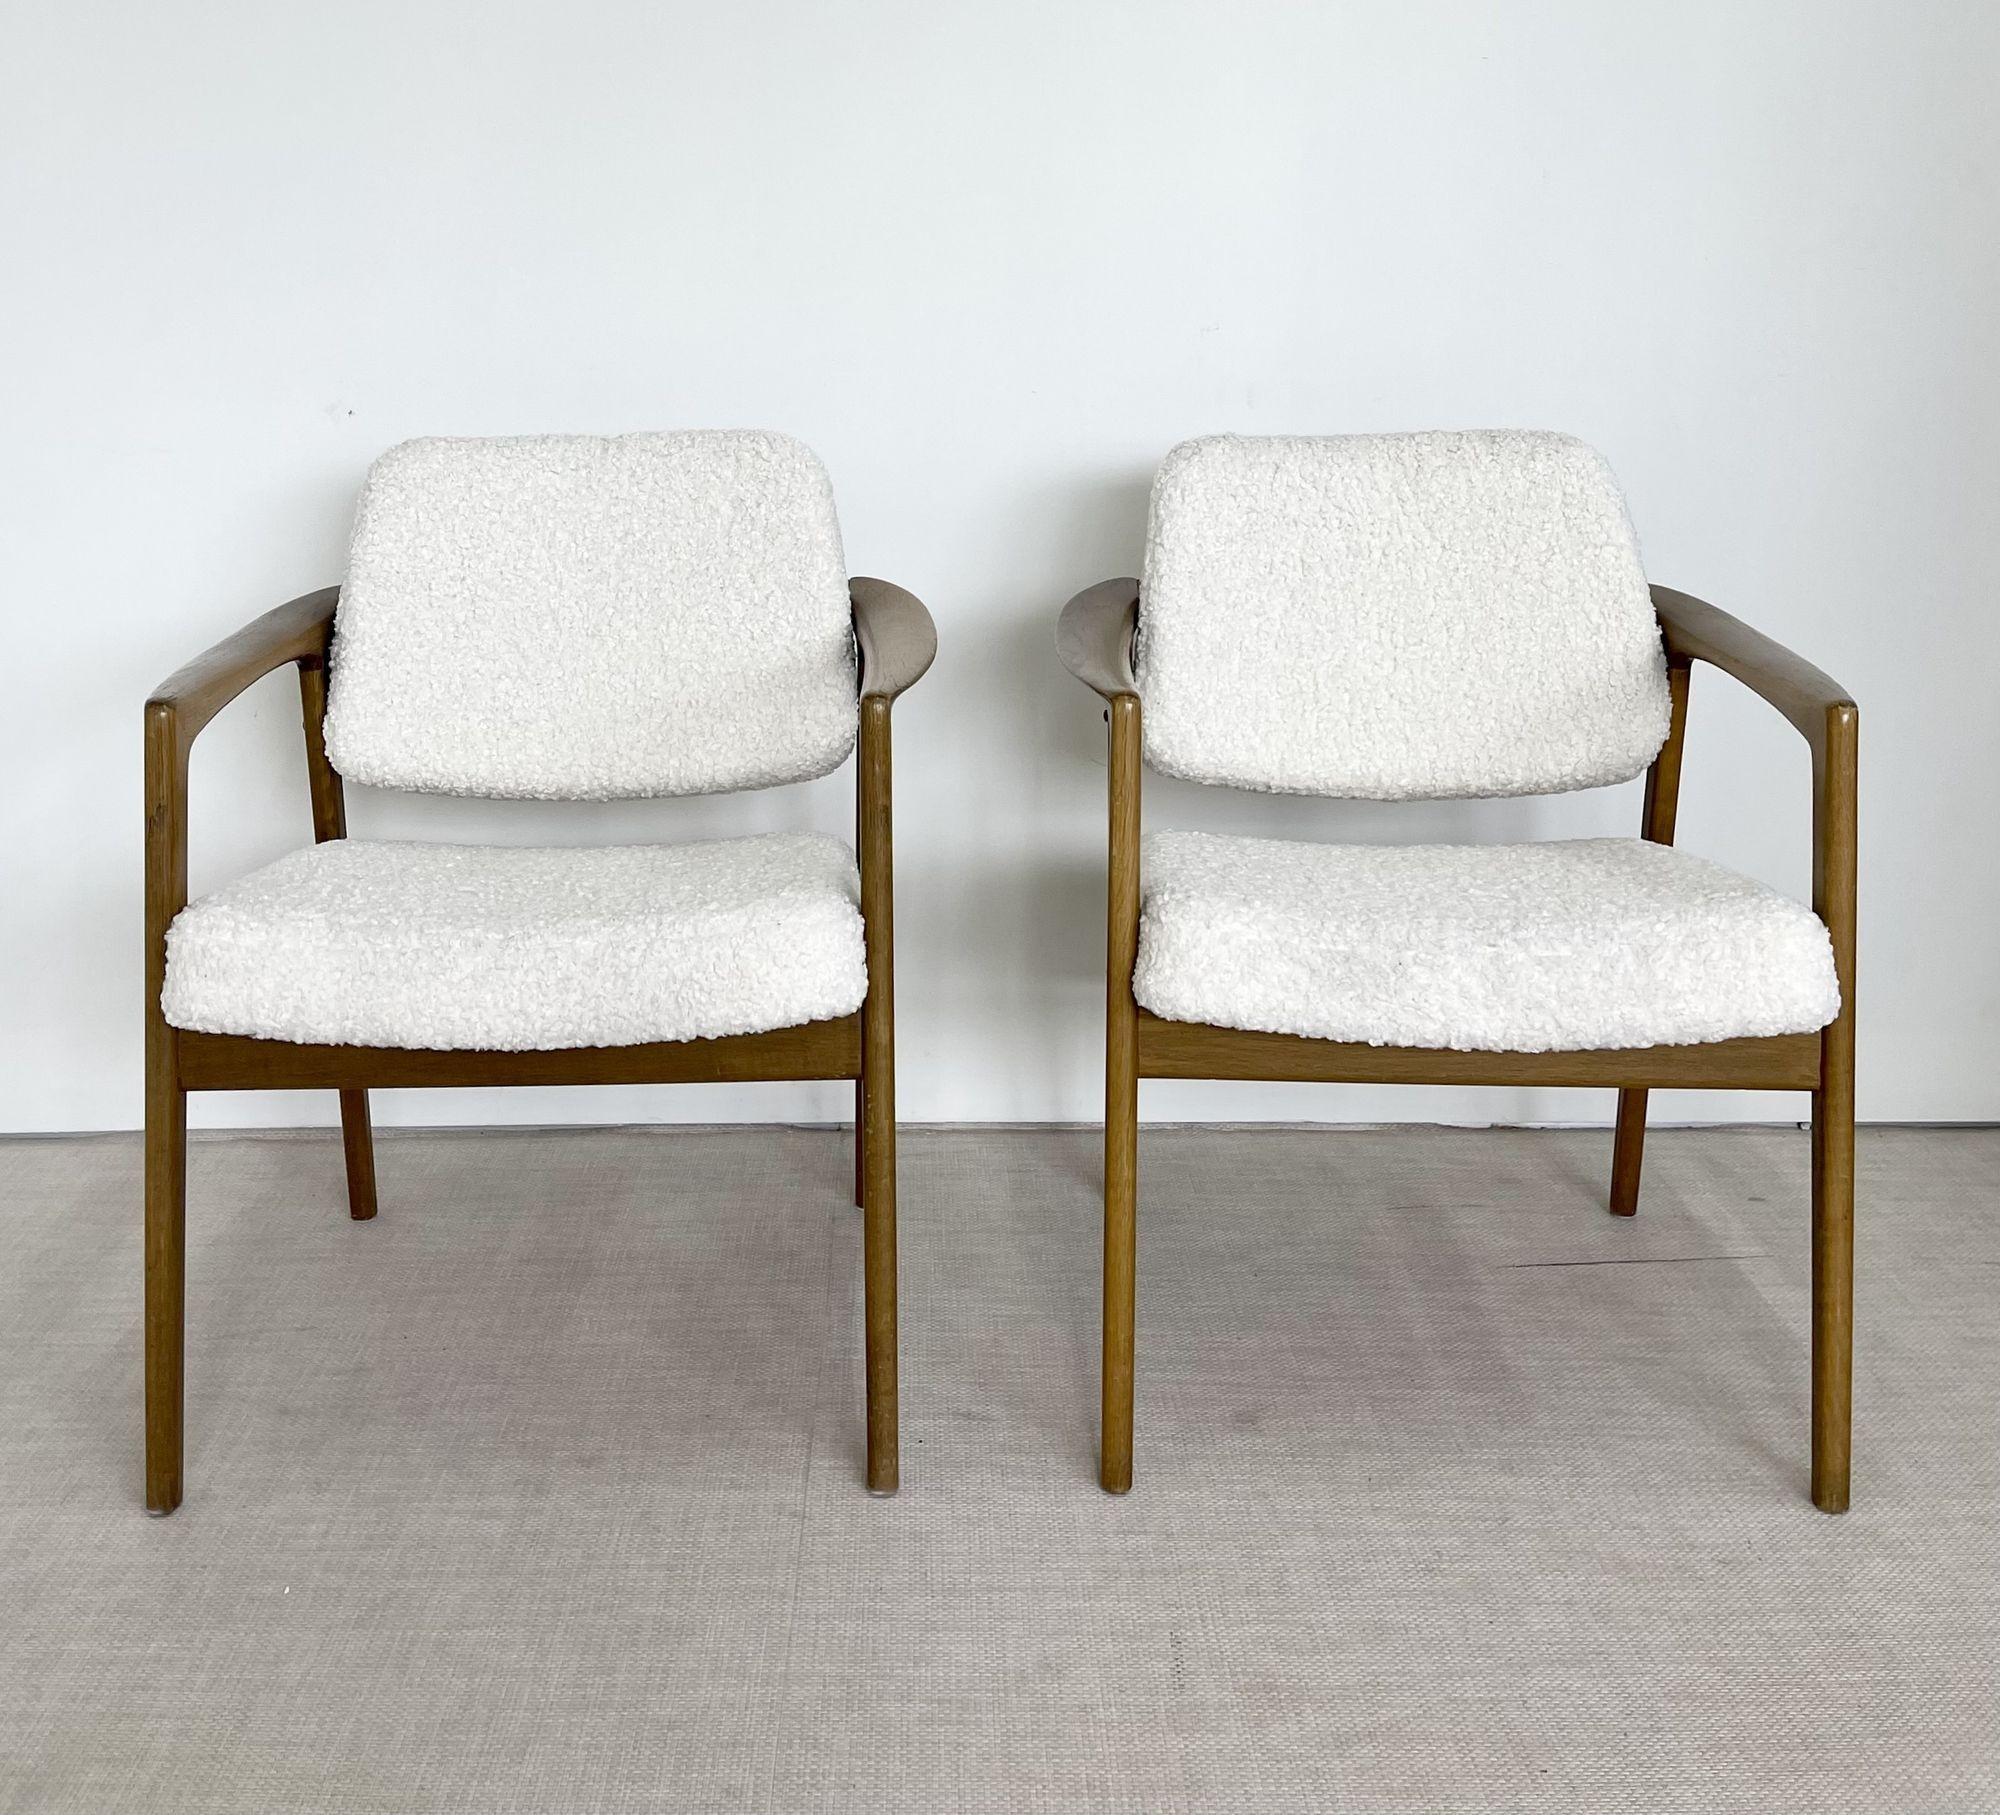 20th Century Swedish Designer, Mid-Century Accent Chairs, White Sheepskin, Oak, Sweden, 1960s For Sale